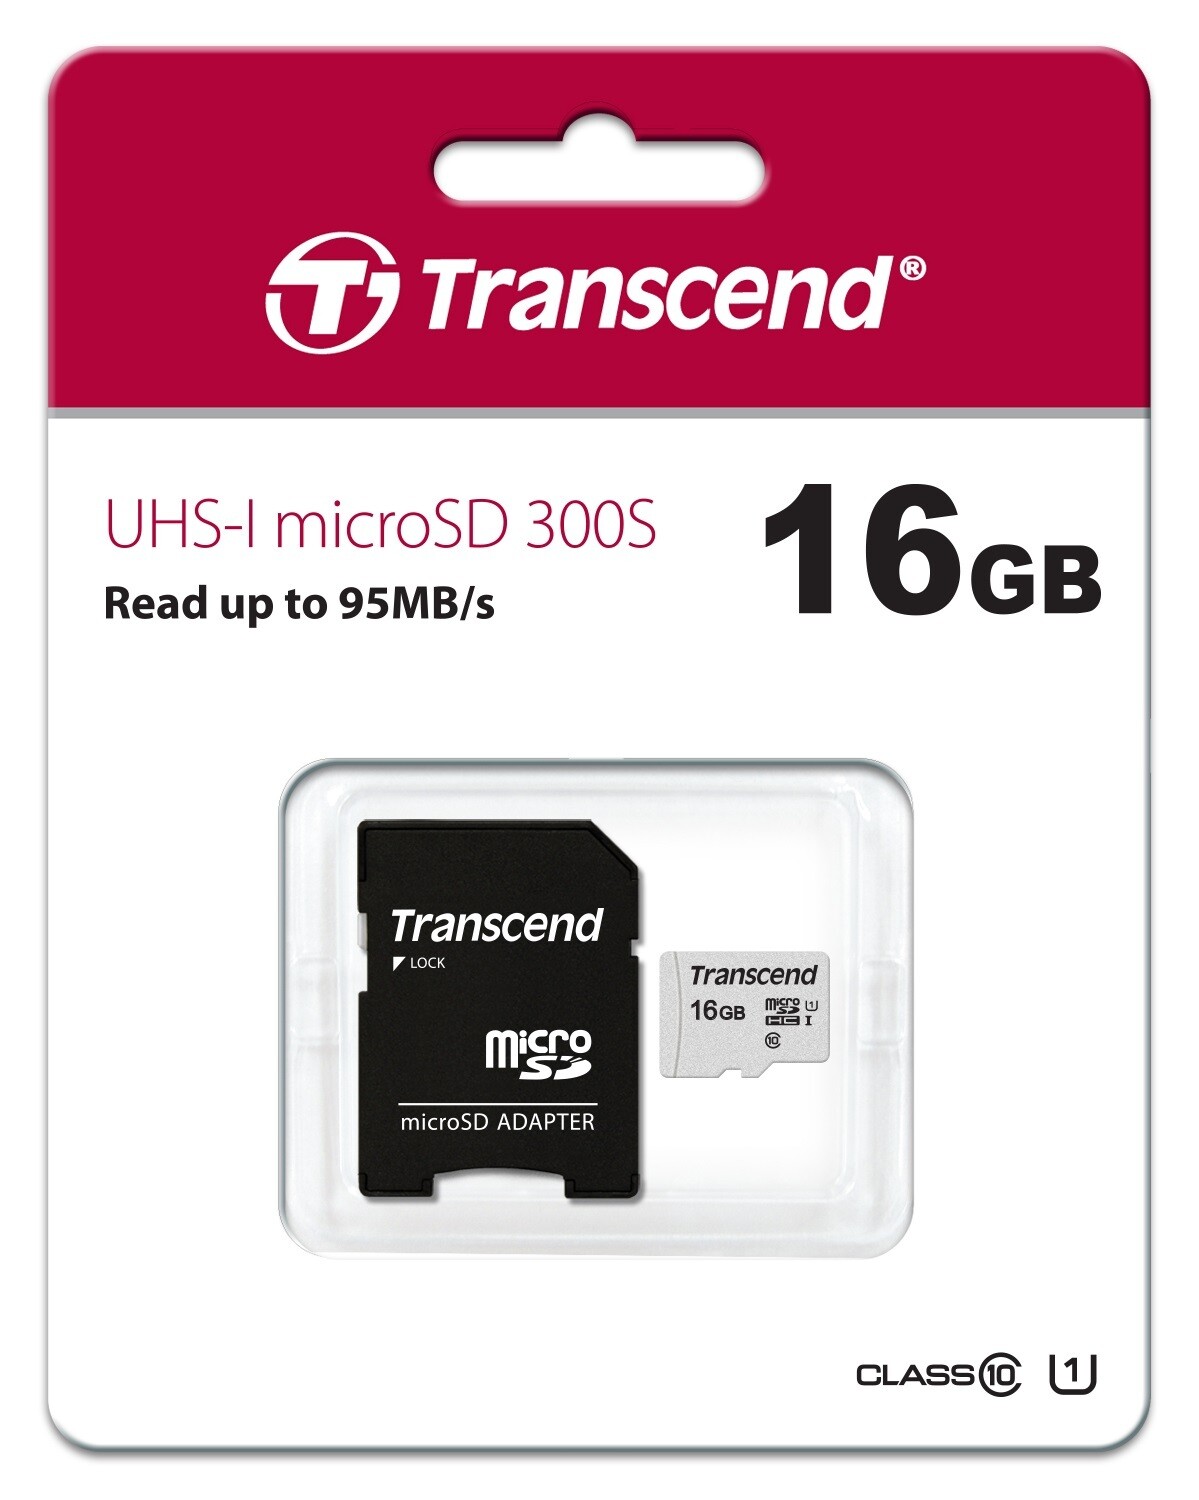 Transcend Micro sd card 16GB SET OF 4